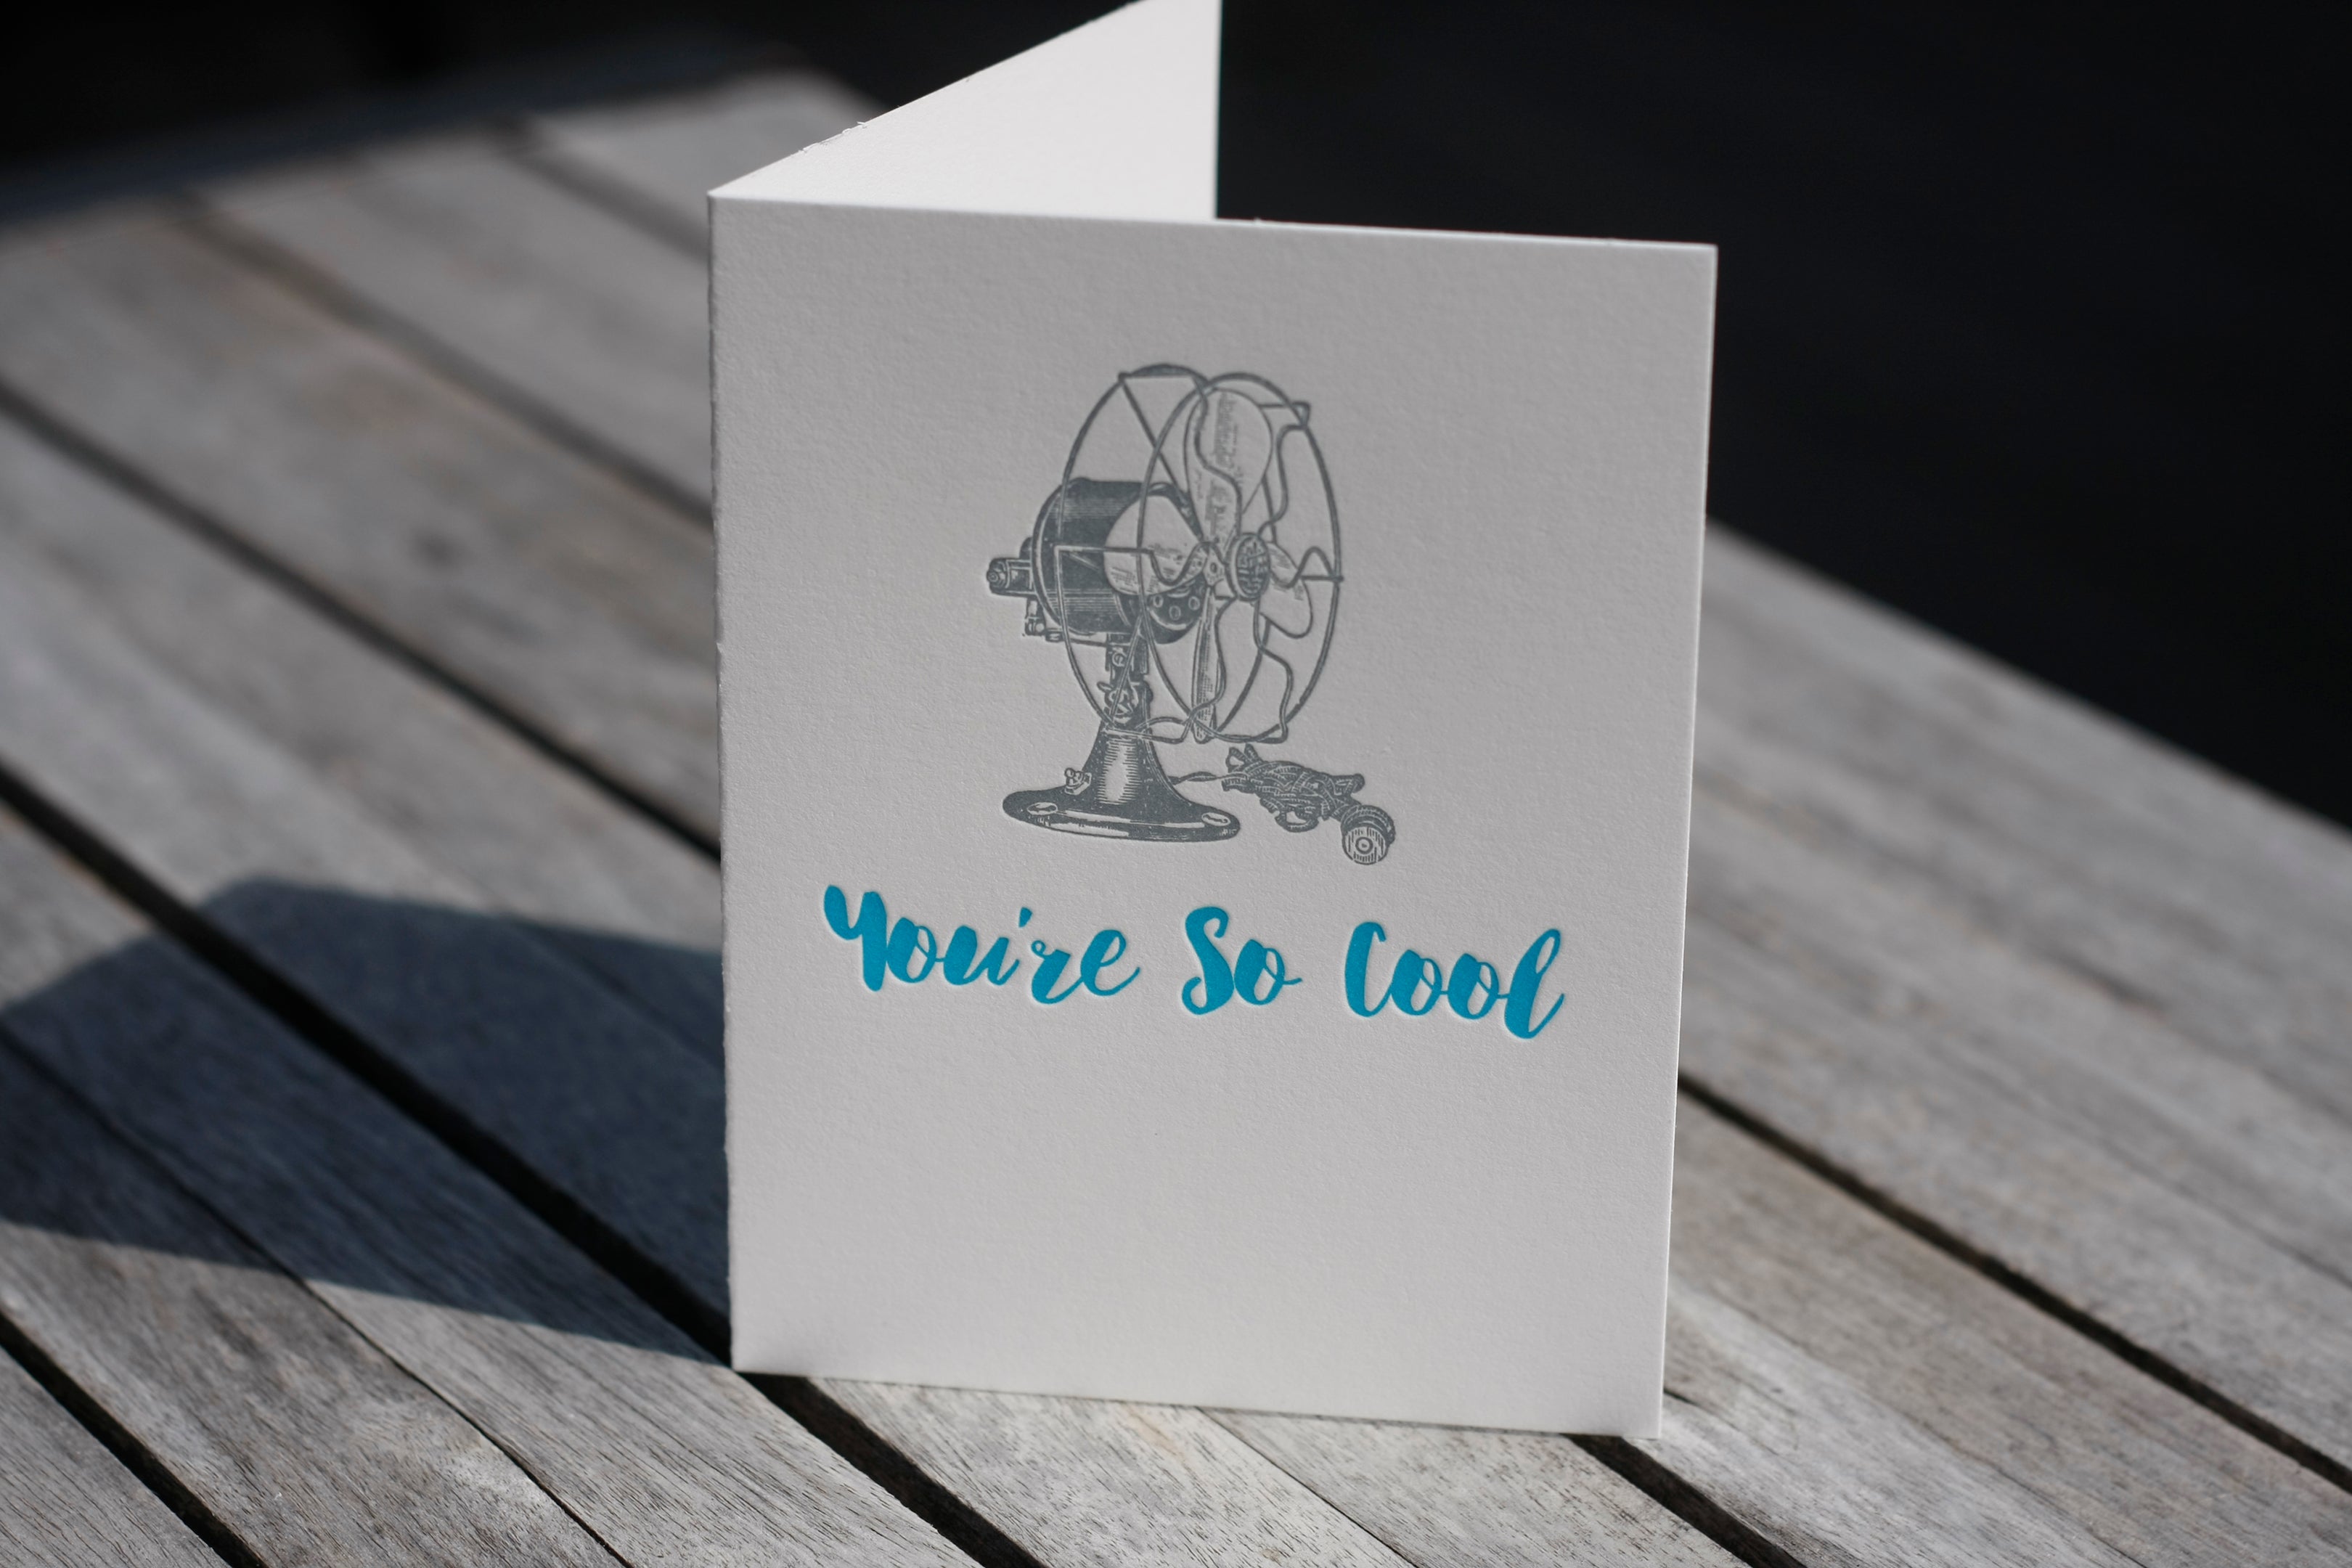 letterpress greeting cards custom printing humor fun ligh hearted greeting cards modern clean simple crane lettrea